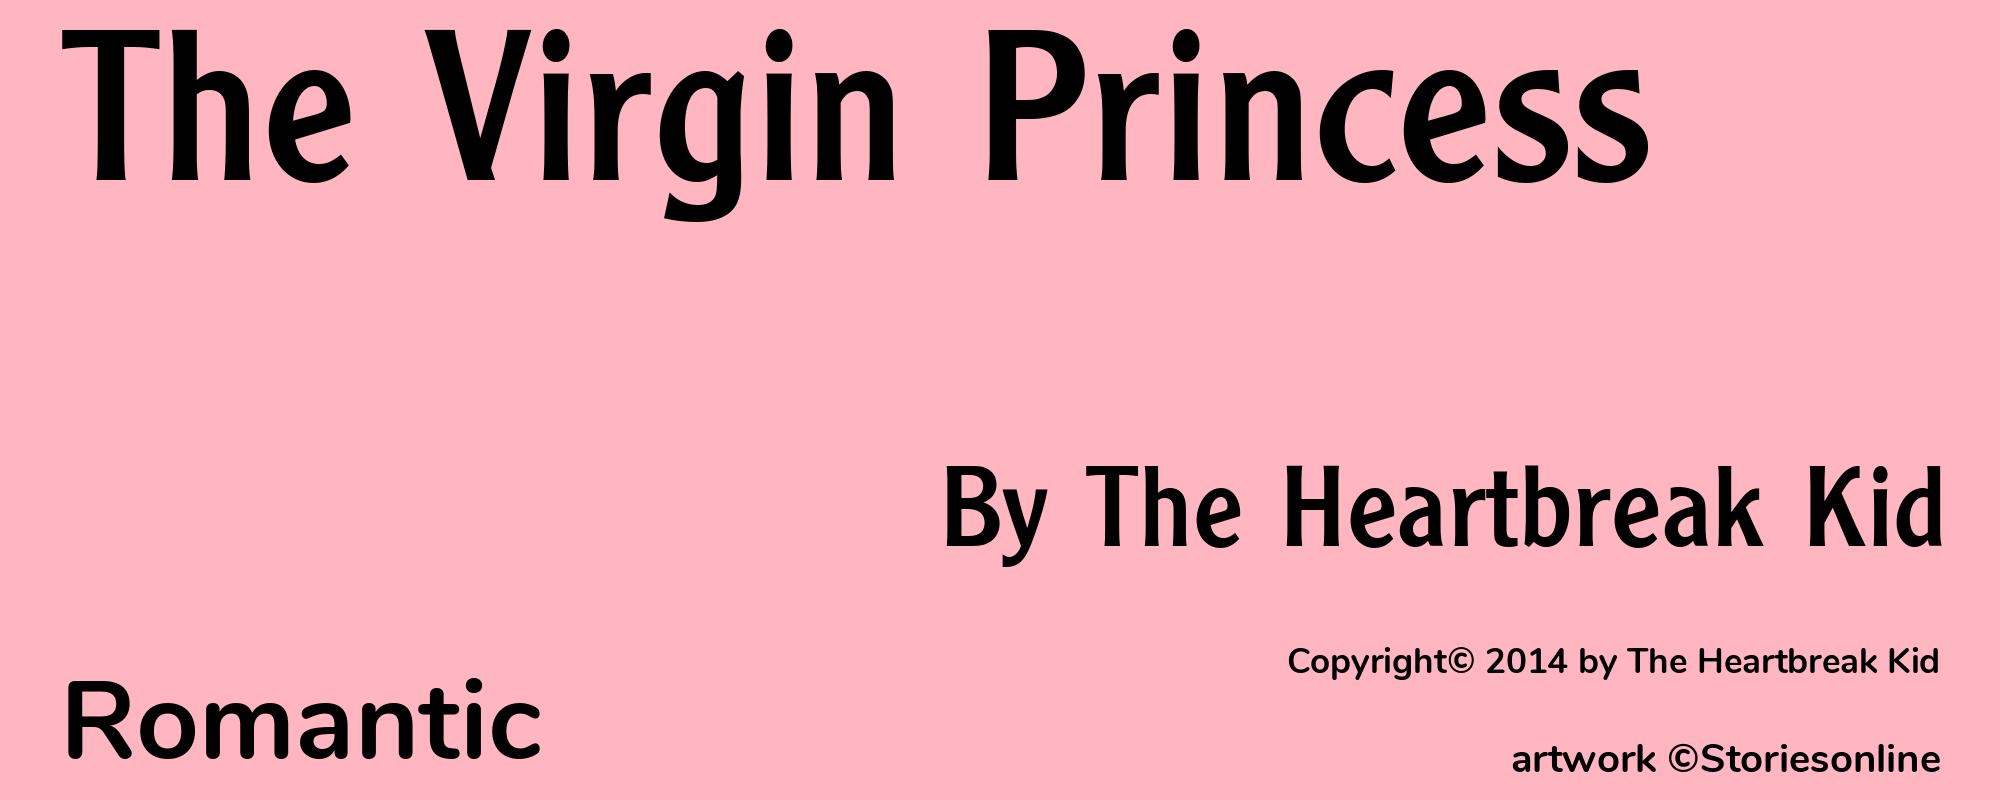 The Virgin Princess - Cover